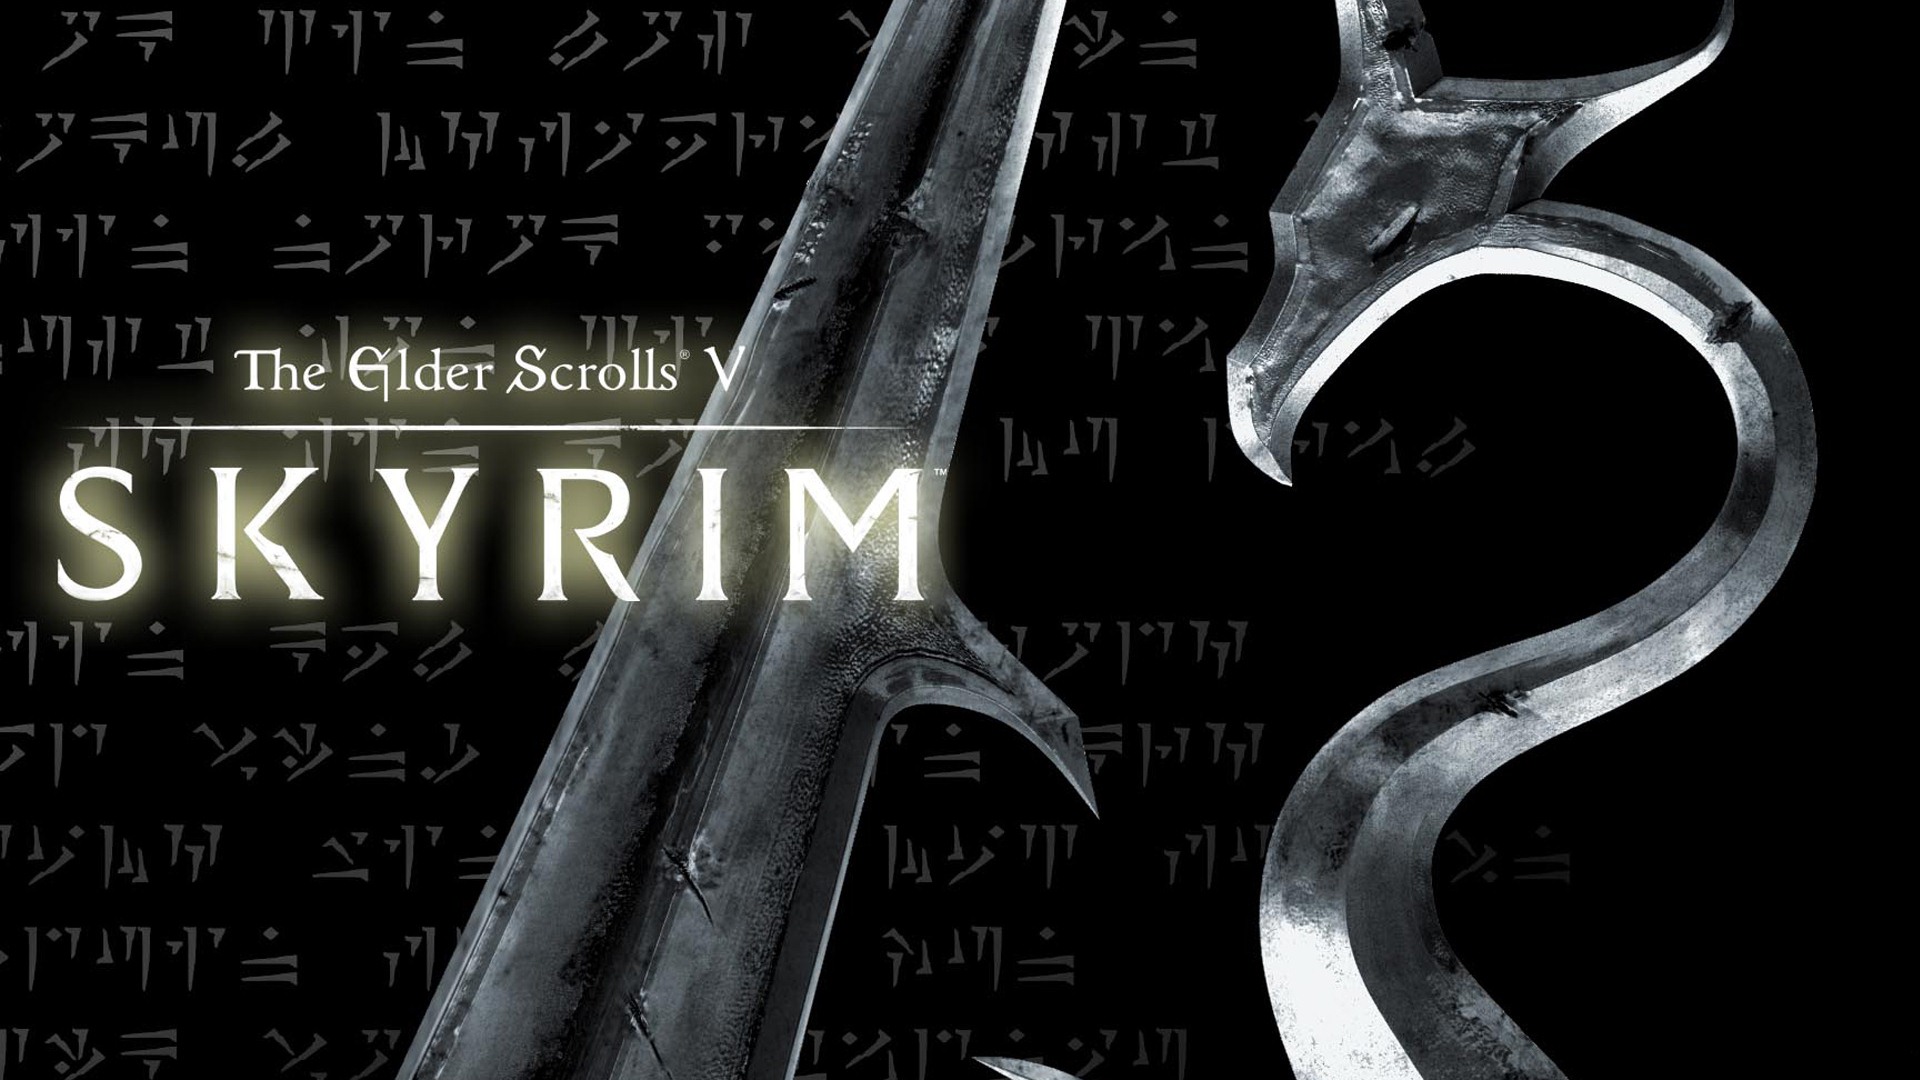 The Elder Scrolls V: Skyrim HD Wallpapers #3 - 1920x1080